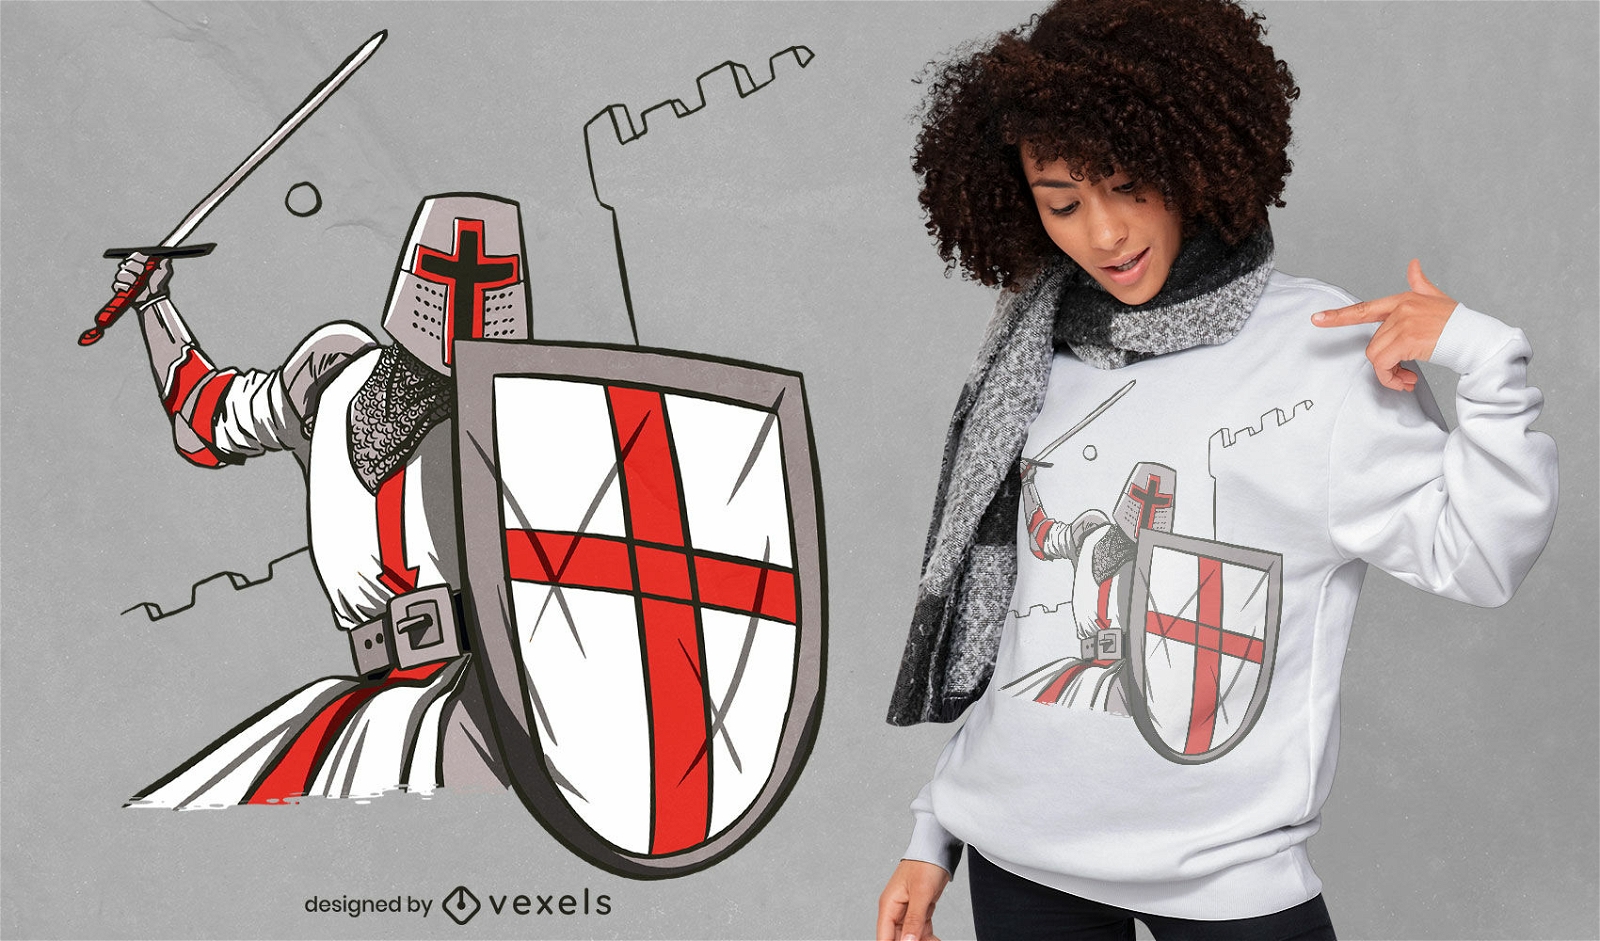 Awesome crusader knight t-shirt design